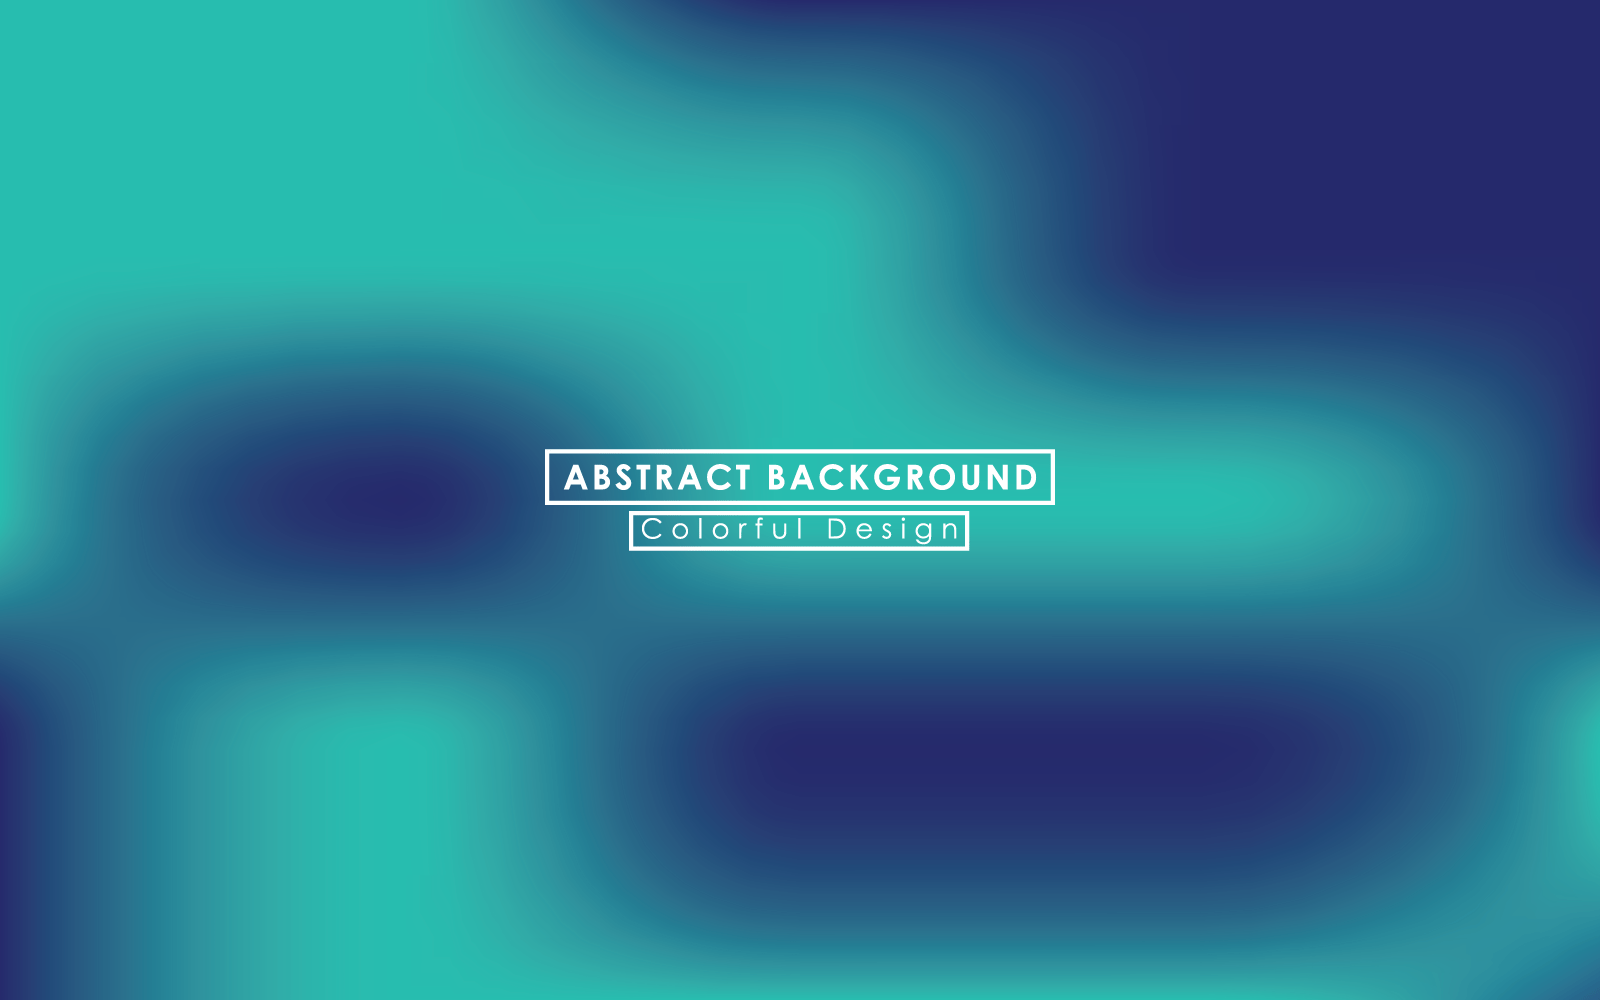 Design Abstract blurred gradient mesh illustration background